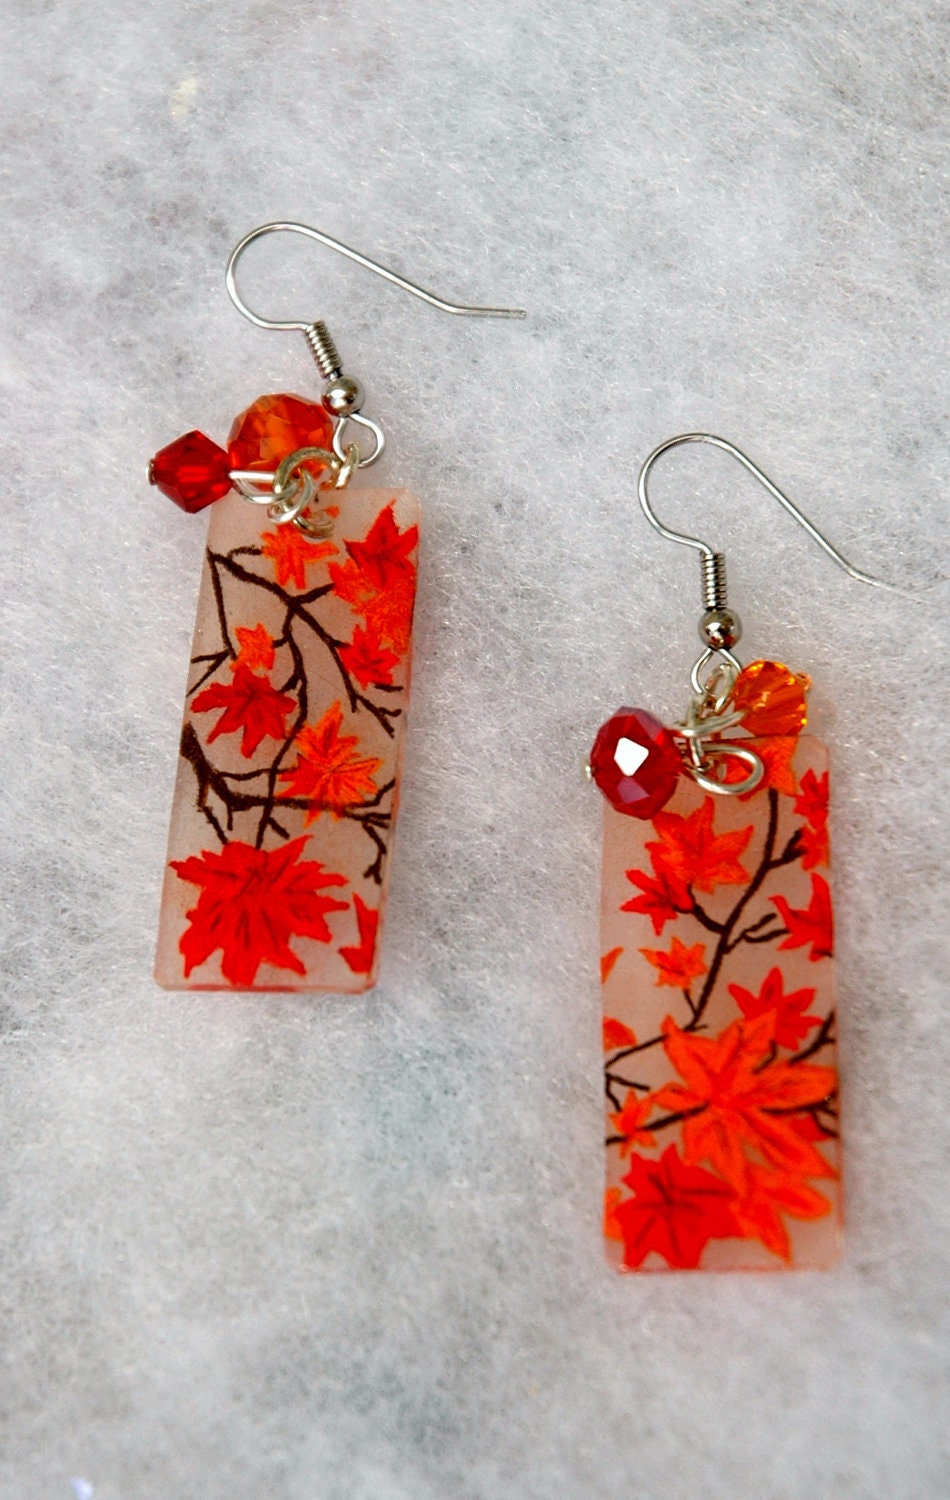 Handmade Autumn, Fall leaf shrink plastic earrings  Orange and Red Crystals.  2 1/2" long.  Free shipping - GreenInspiredDesigns